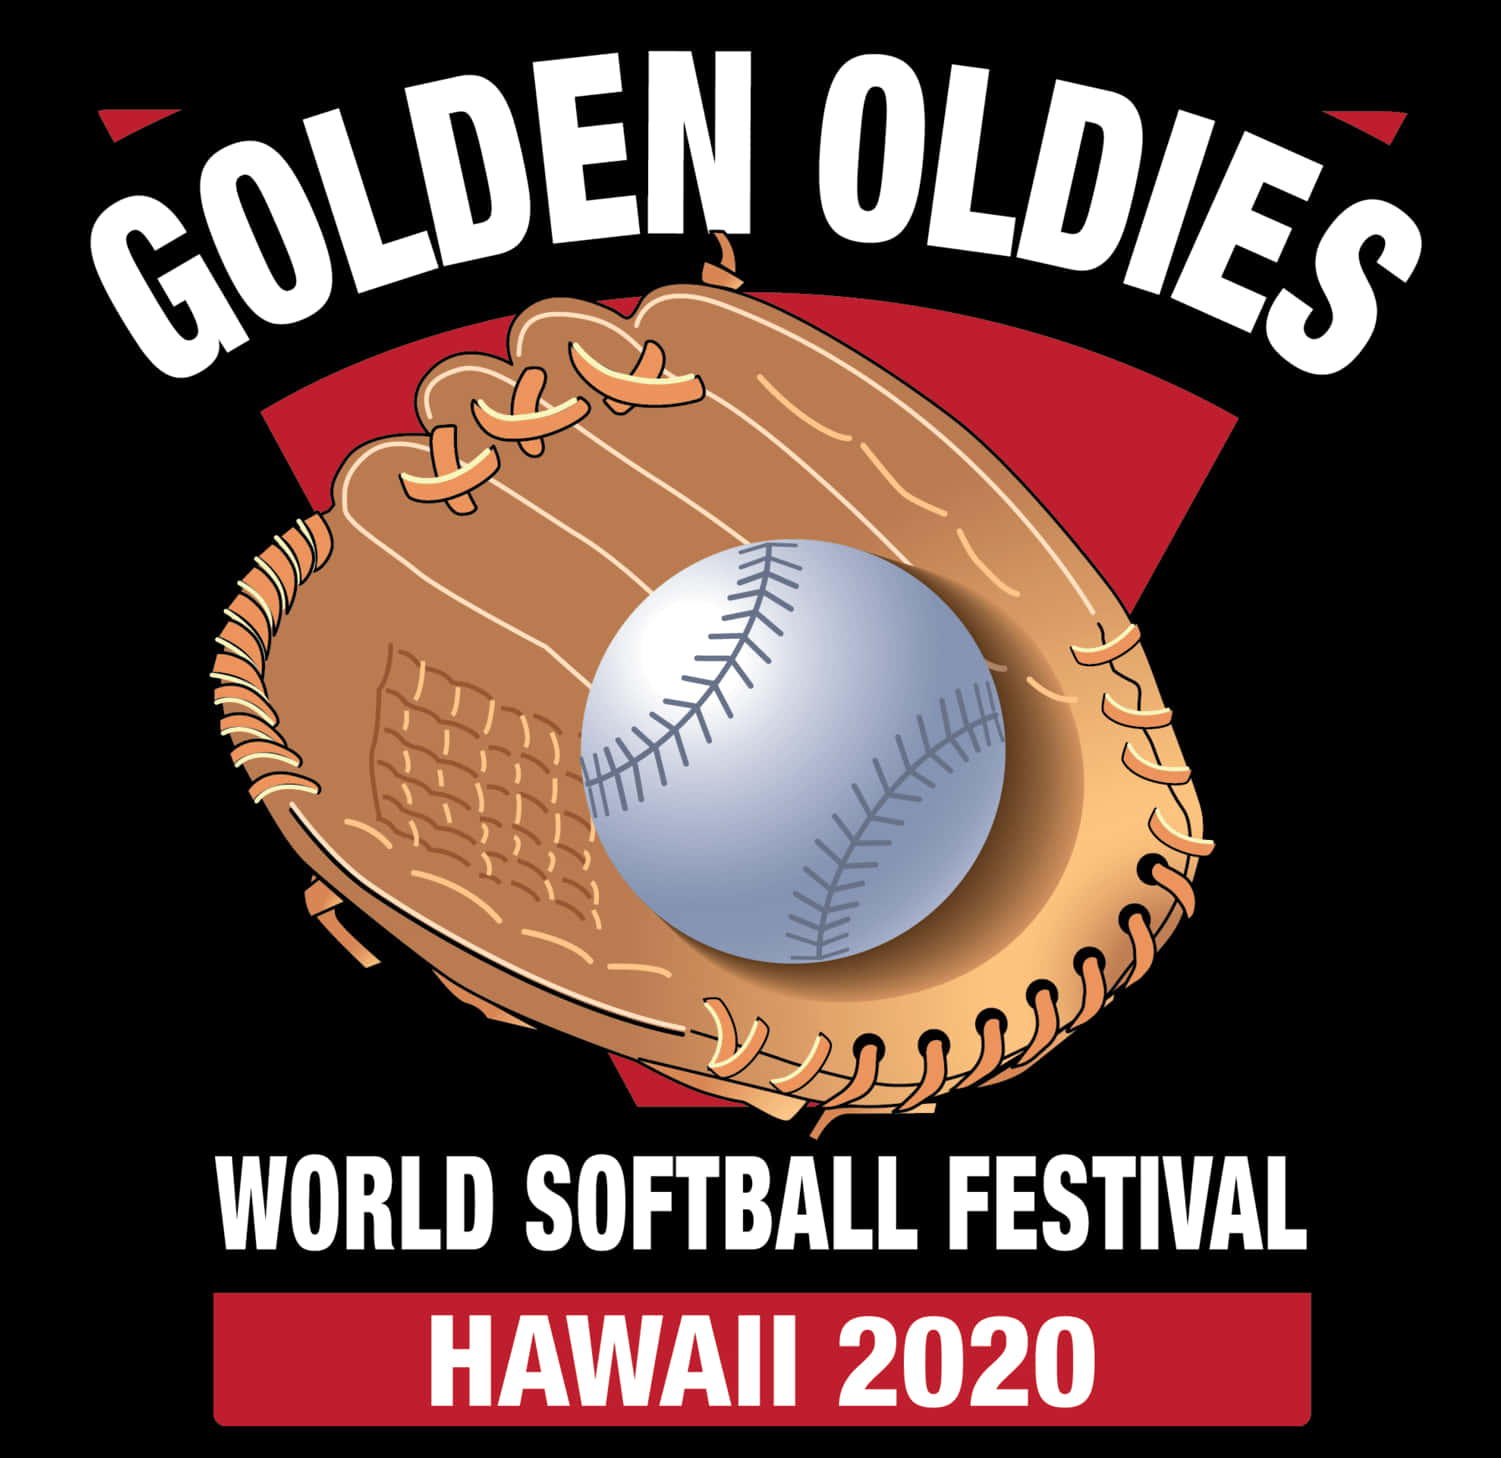 Golden Oldies World Softball Festival Hawaii2020 Logo PNG